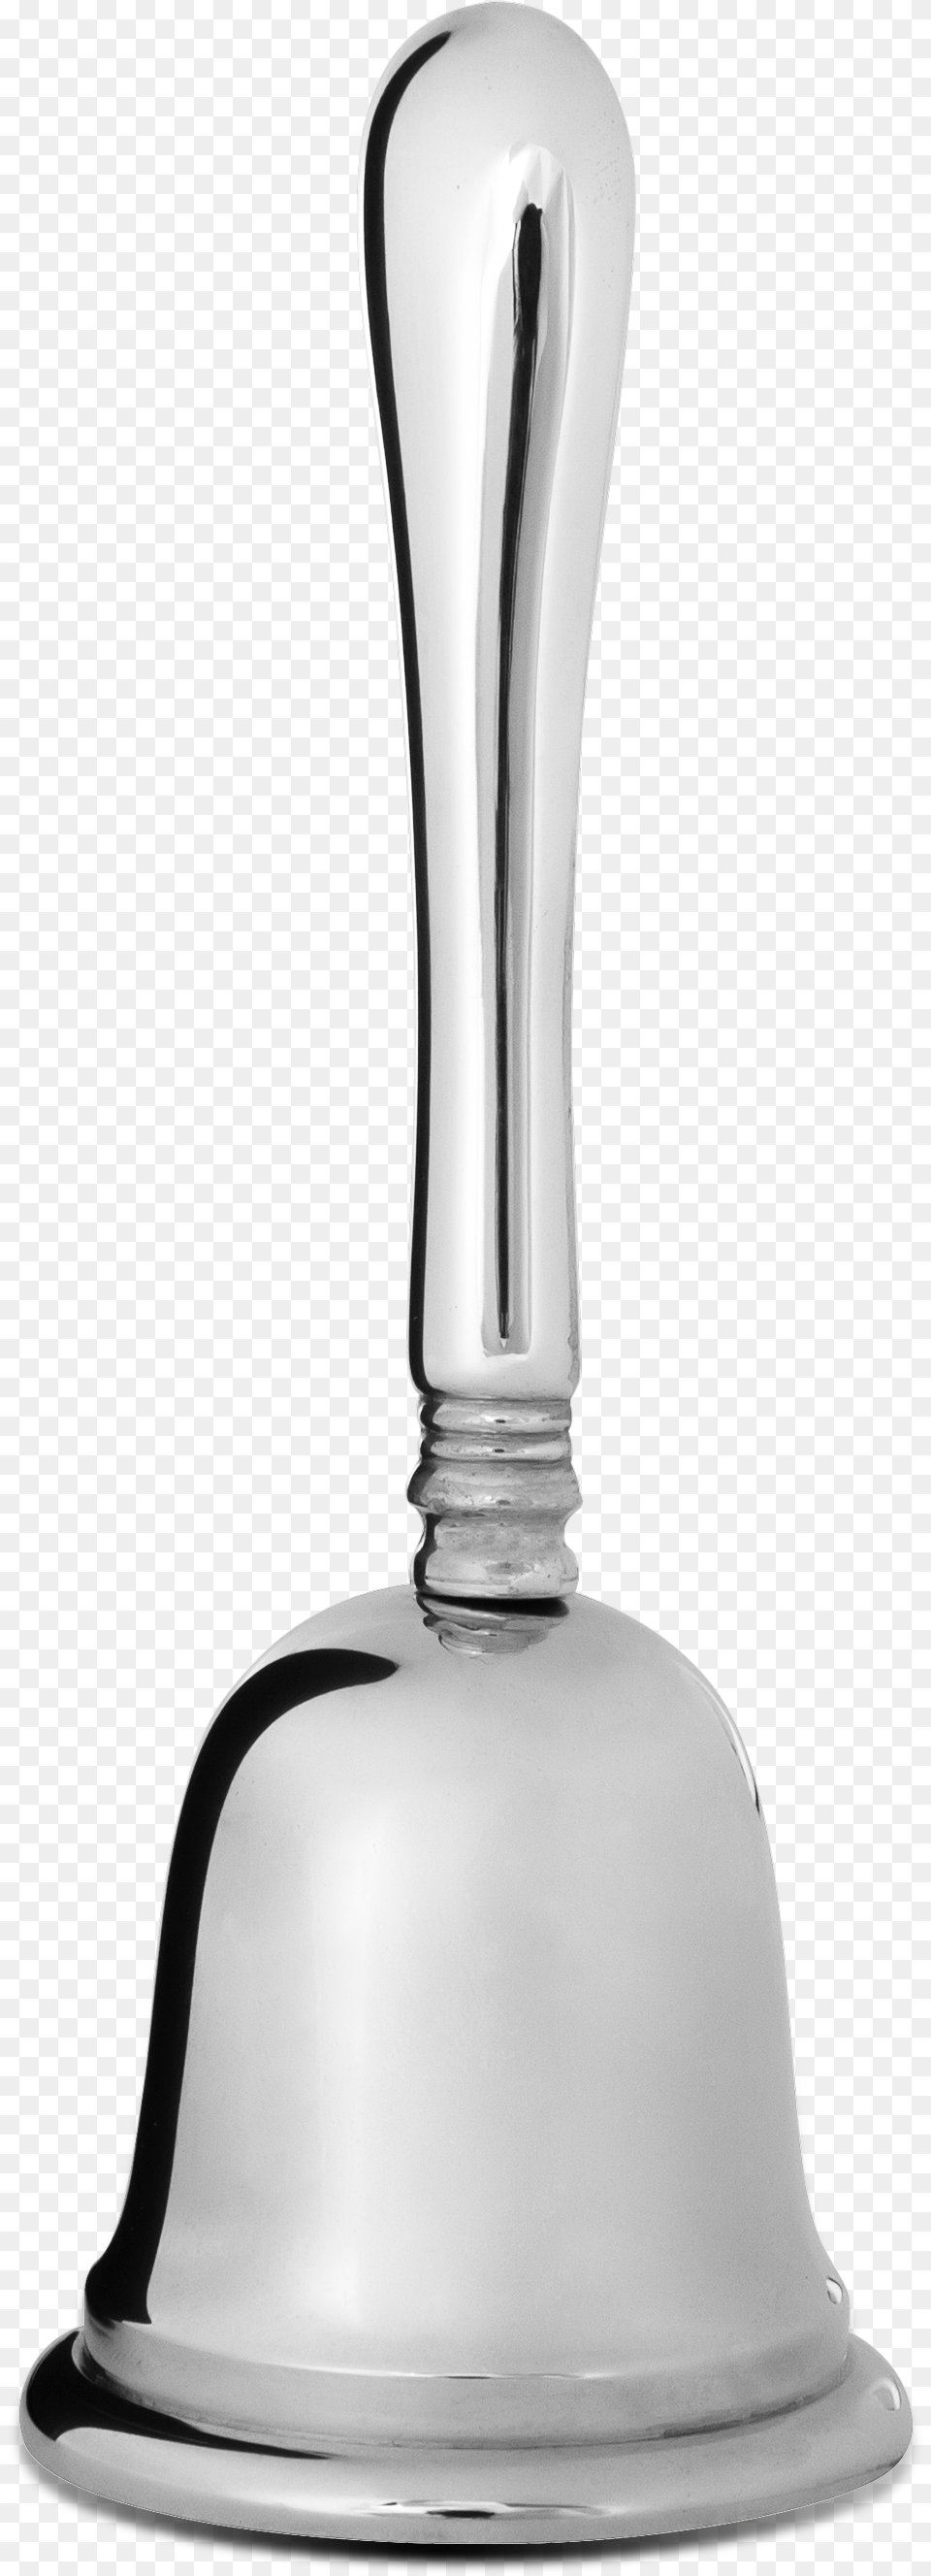 Jarosinski Amp Vaugoin Silver Bells Design Transparent Silver Bell, Smoke Pipe Png